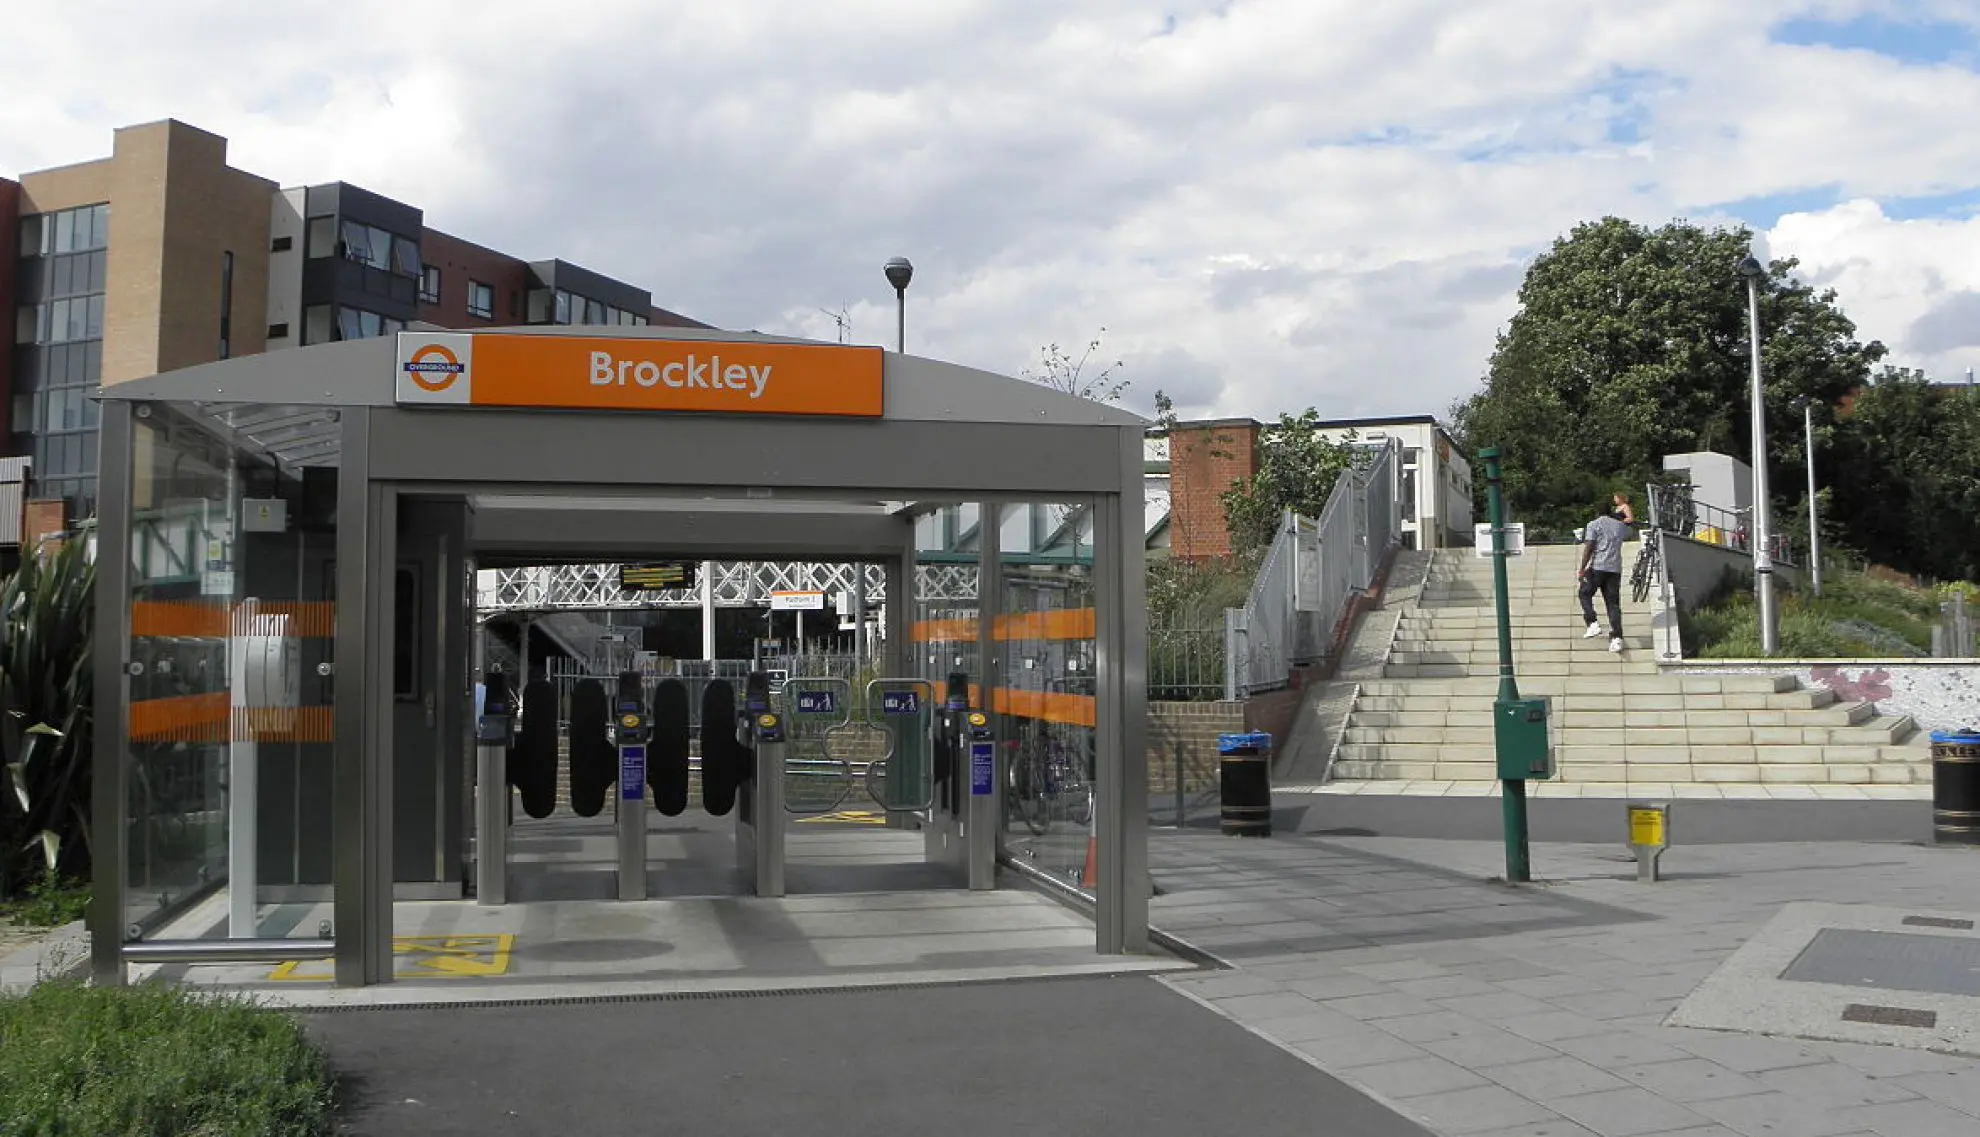 Brockley Station in the SE4 London postcode